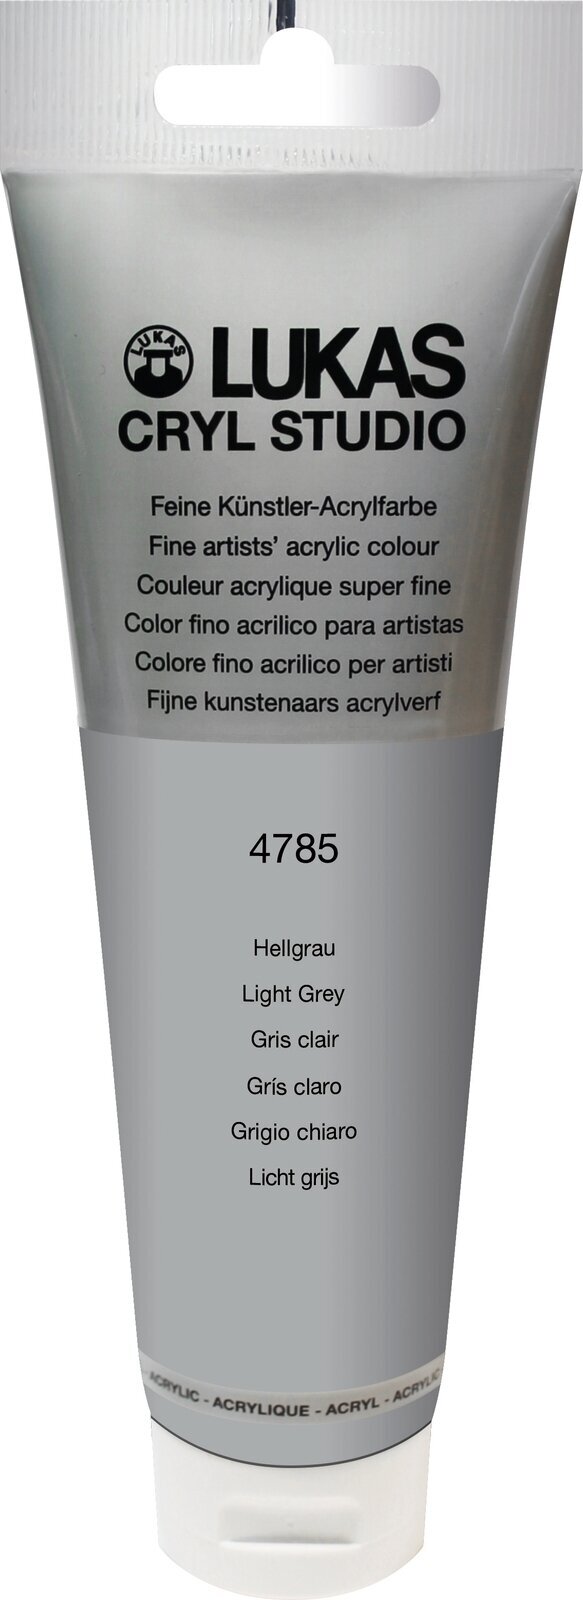 Akrylová farba Lukas Cryl Studio Acrylic Paint Plastic Tube Akrylová farba Light Grey 125 ml 1 ks